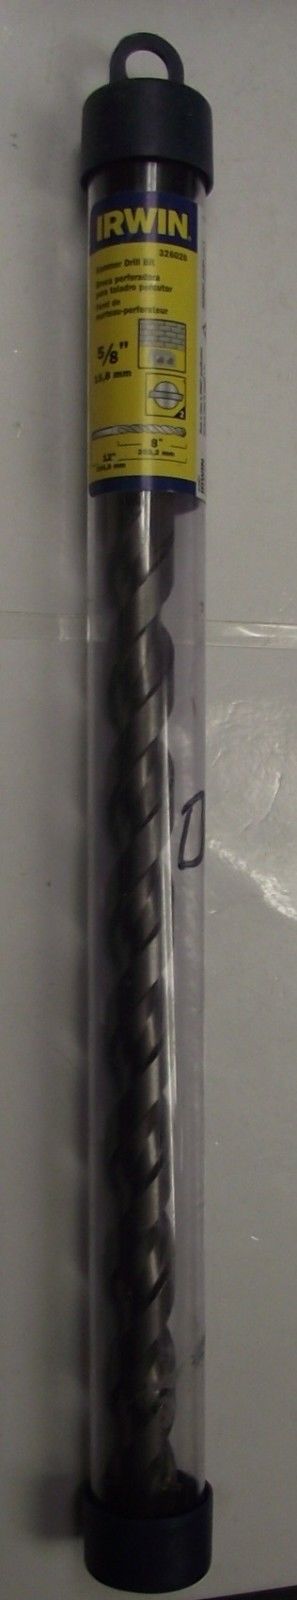 Irwin Industrial Tools 326020 Masonry Hammer Bit - 5/8" x 8 x 12 With 1/2 Shank